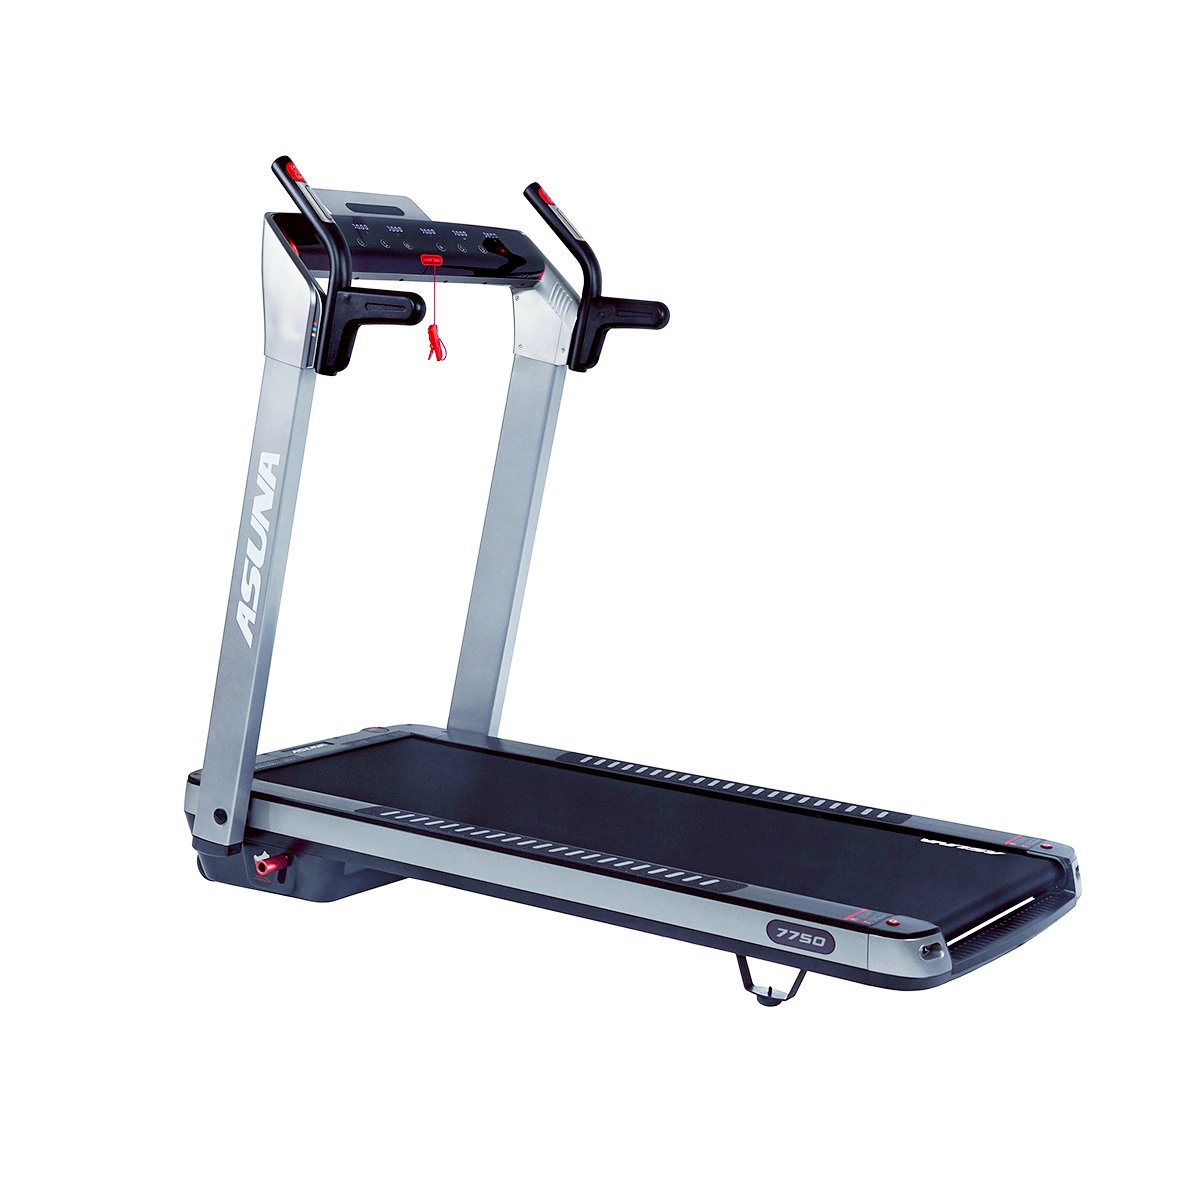 SpaceFlex Motorized Treadmill